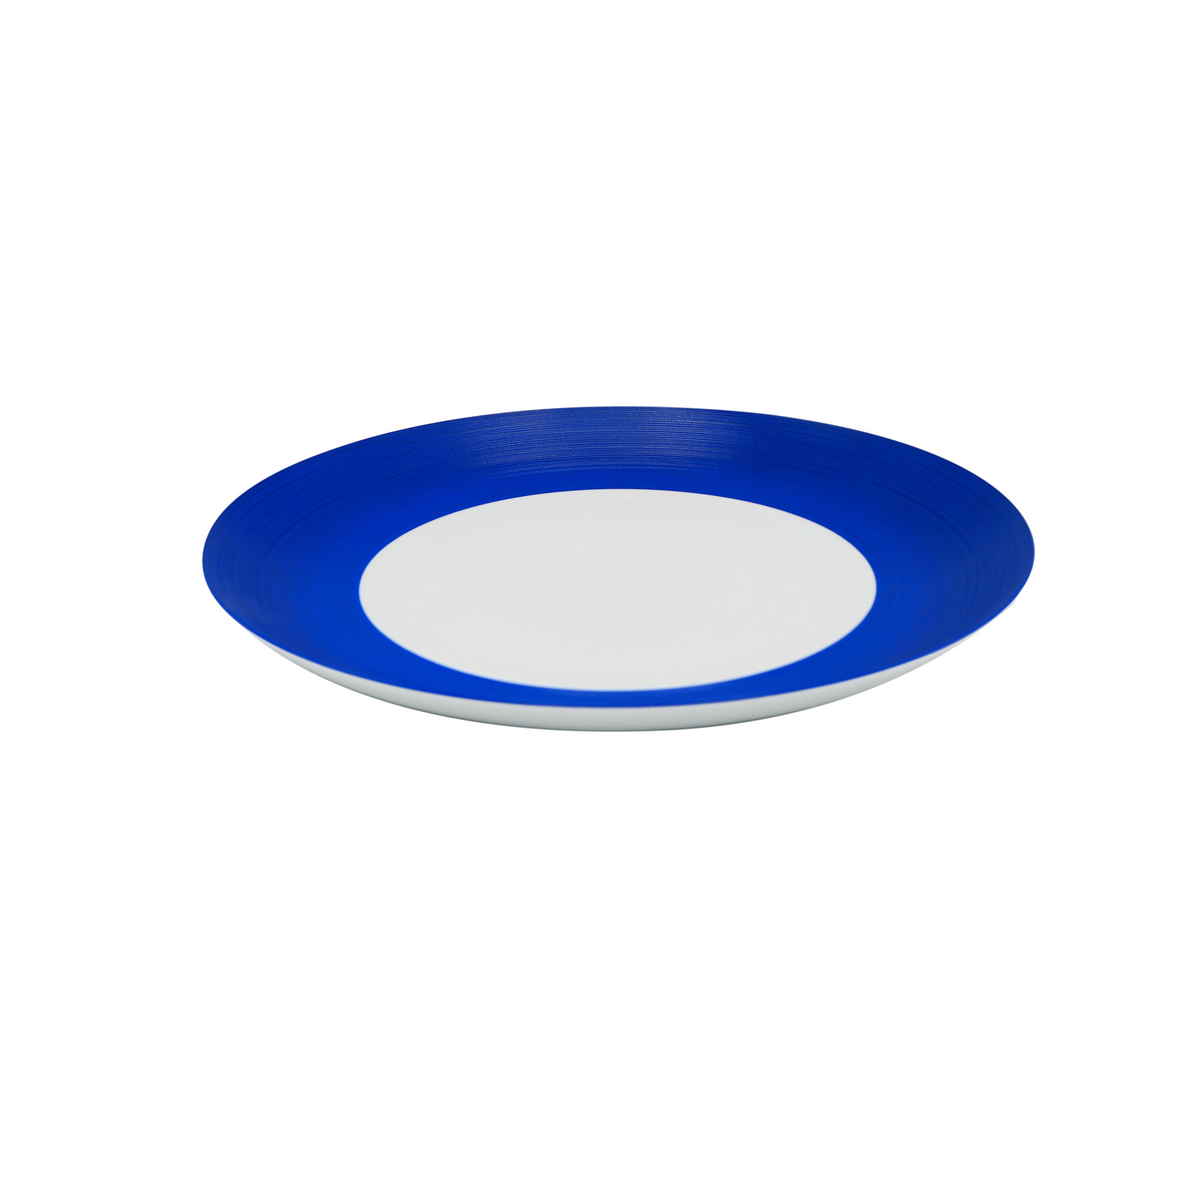 HEMISPHERE Royal Blue - Flat round dish, medium